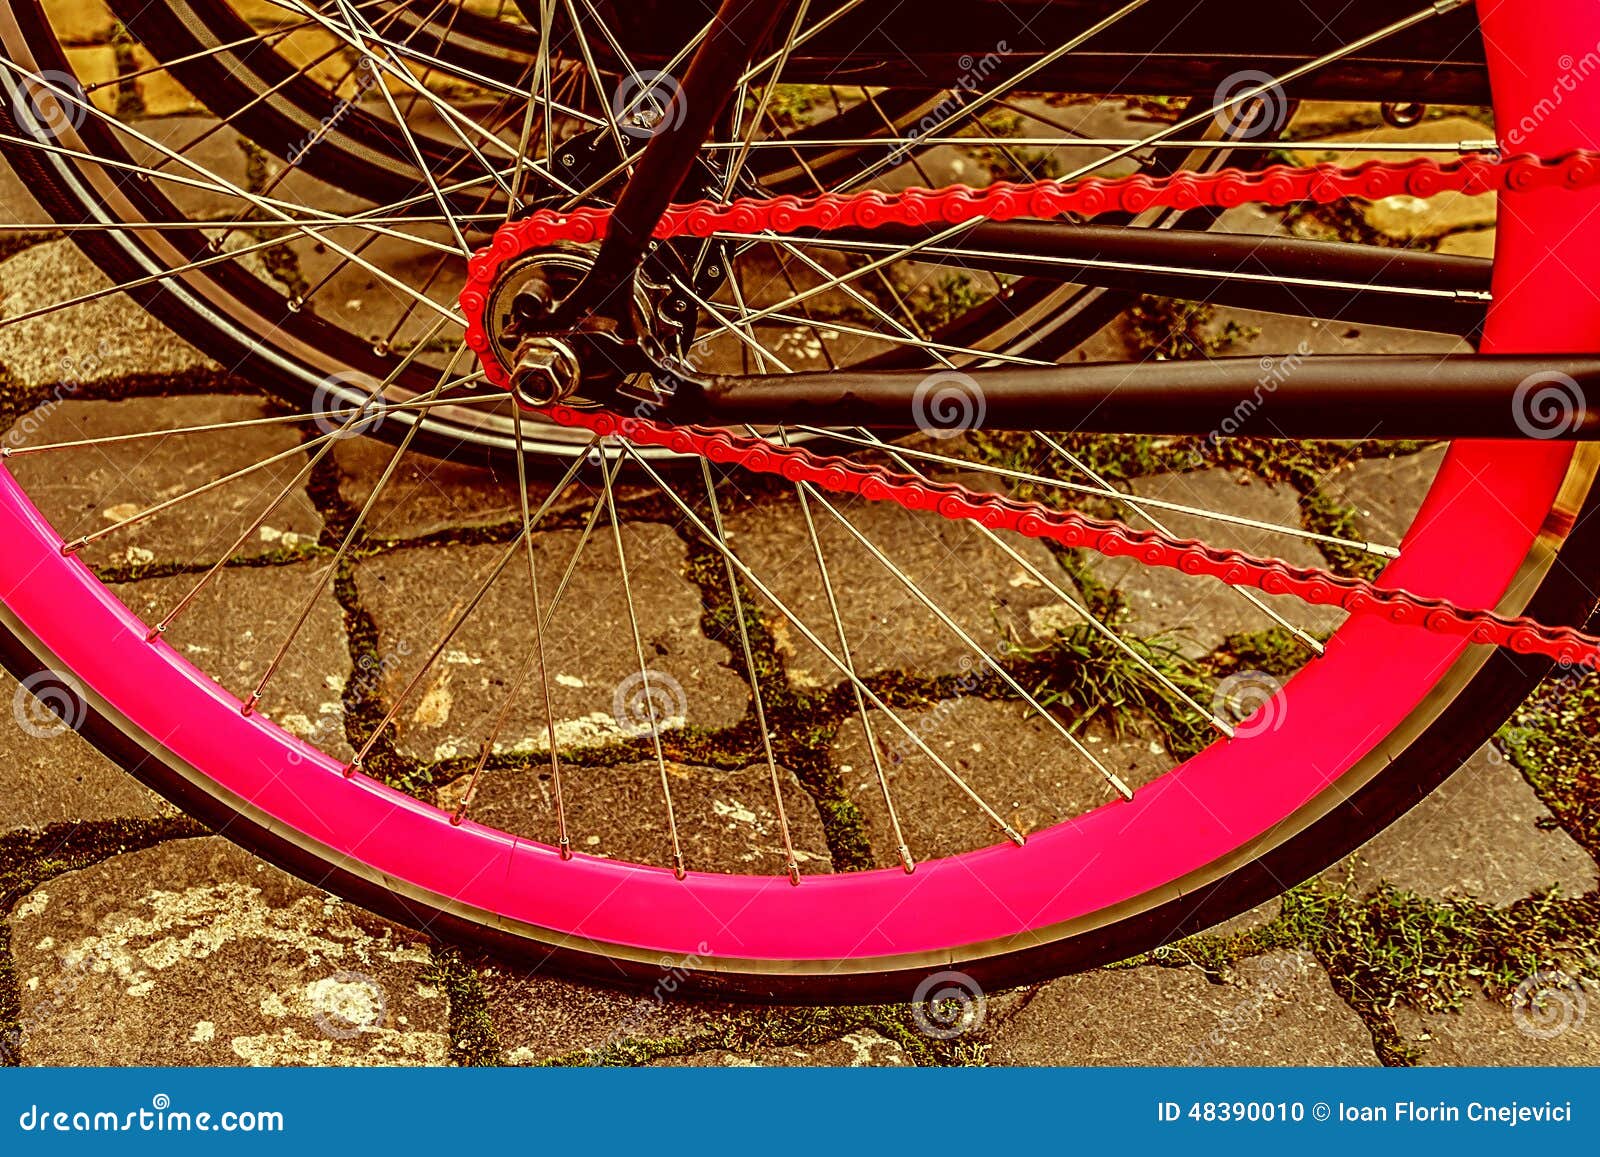 Vintage look at one bicycle detail. Vintage look at detail of bicycle red chain, derailleur and pink rear wheel.